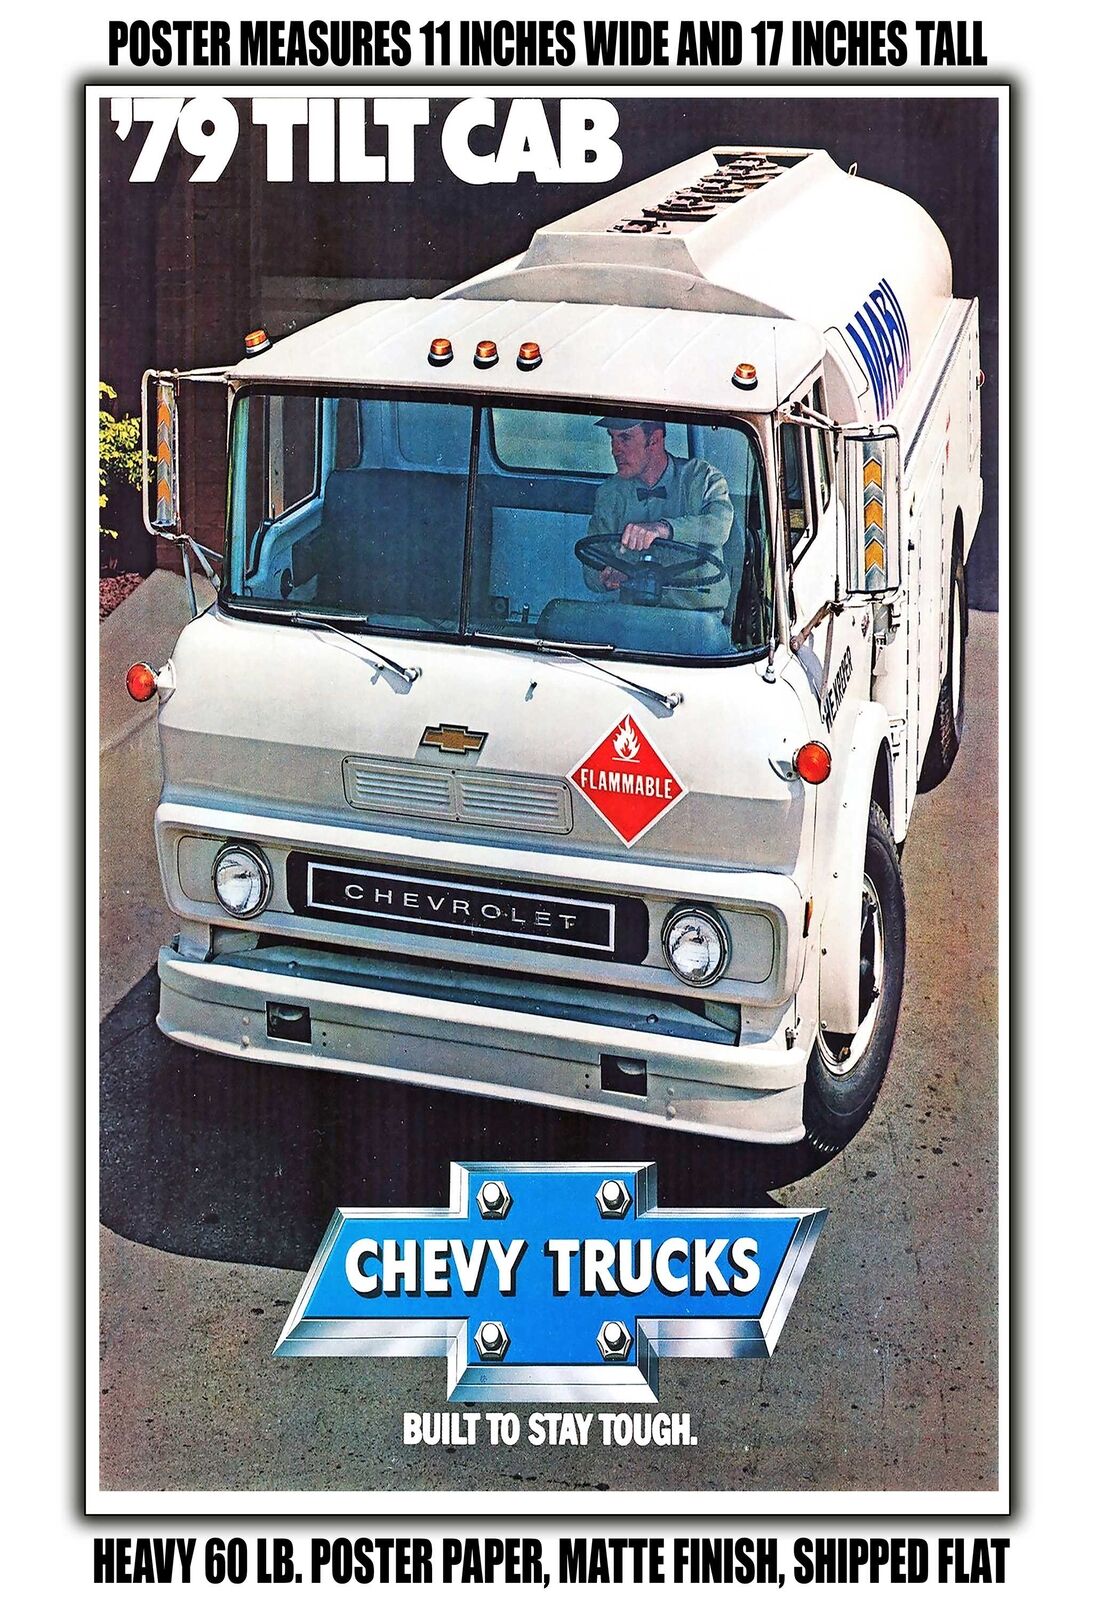 11x17 POSTER - 1979 Chevy Tilt Cab W70 Trucks